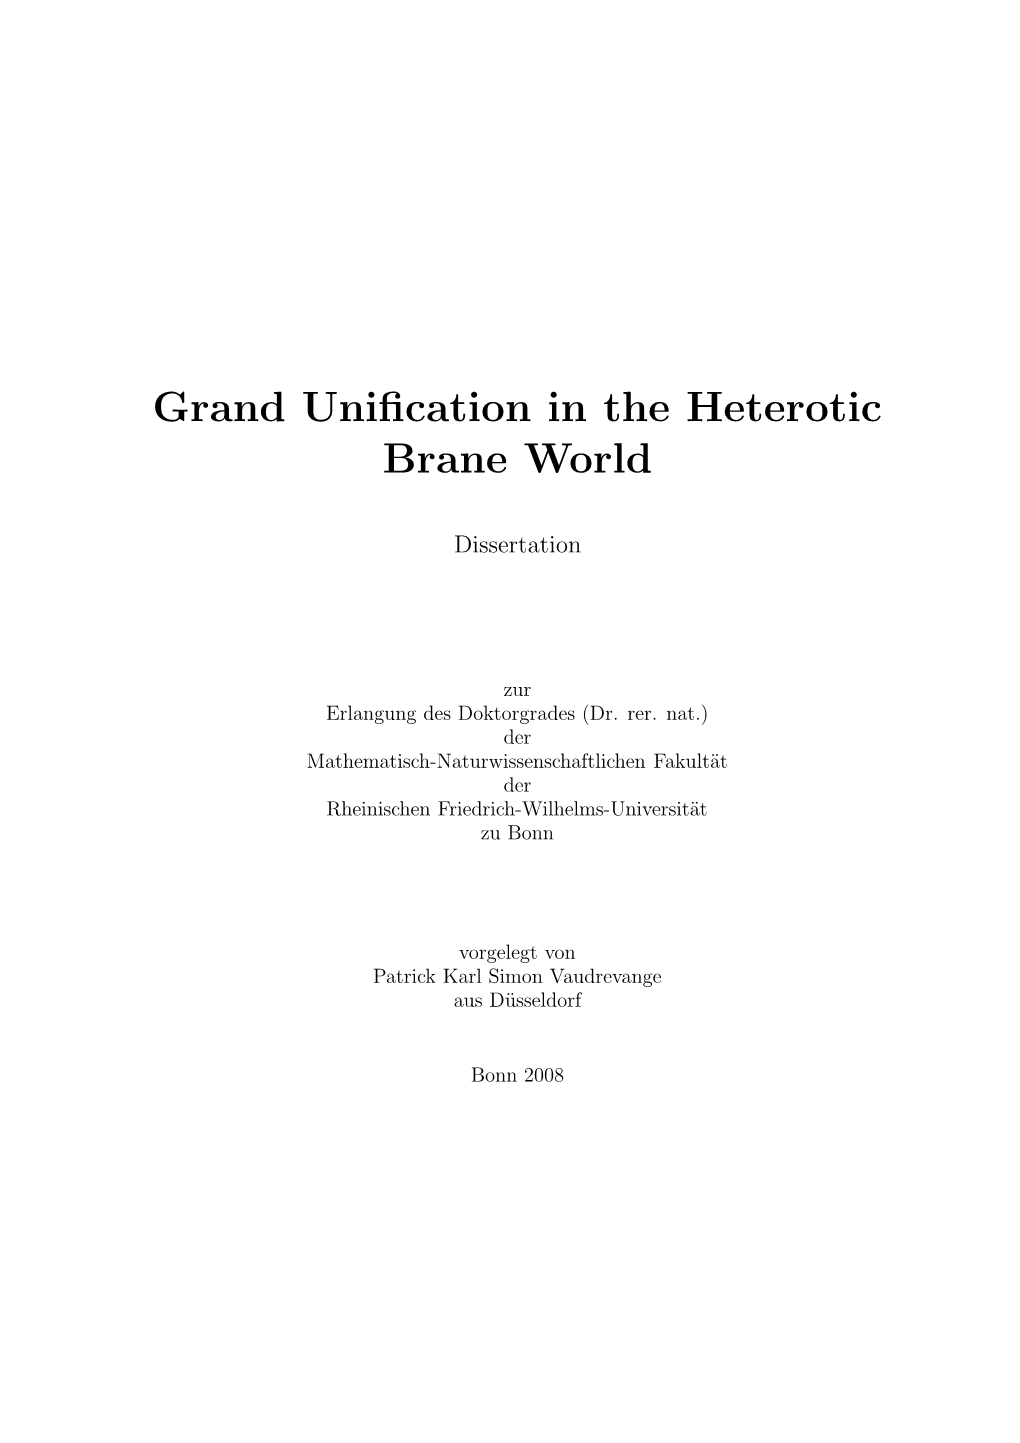 Grand Unification in the Heterotic Brane World